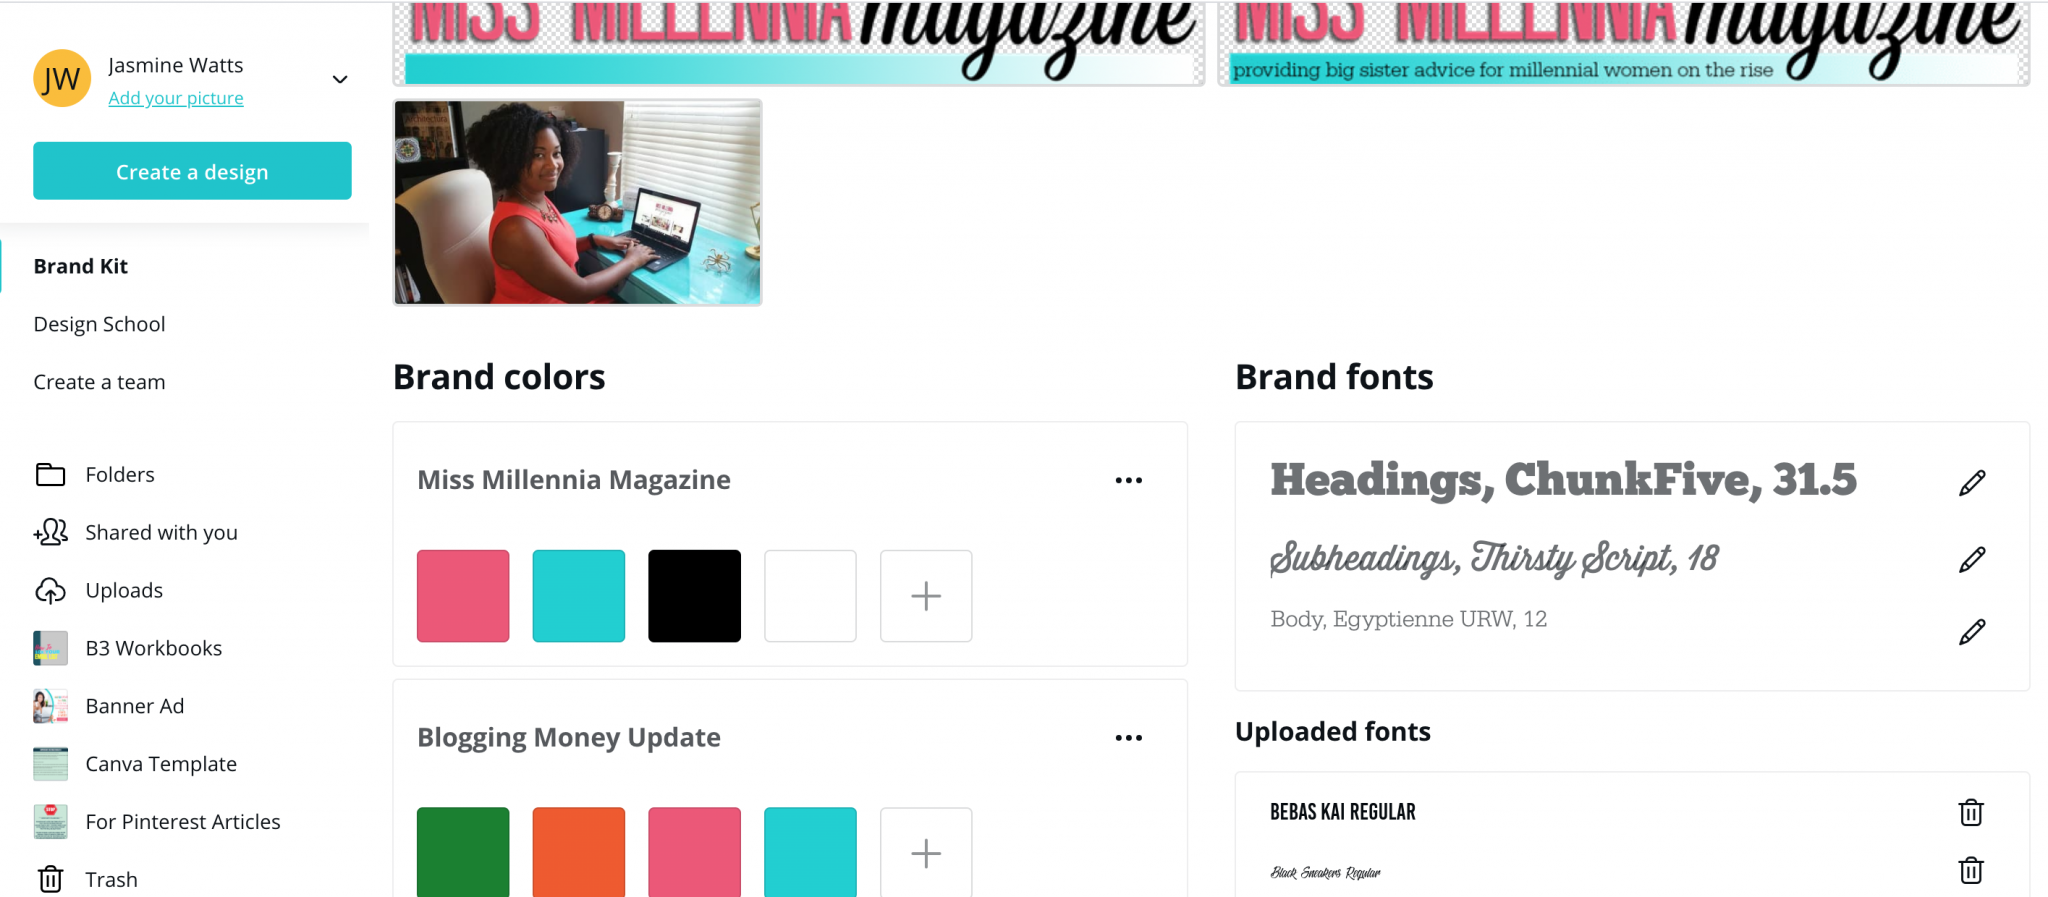 Miss Millennia Magazine brand colors & fonts